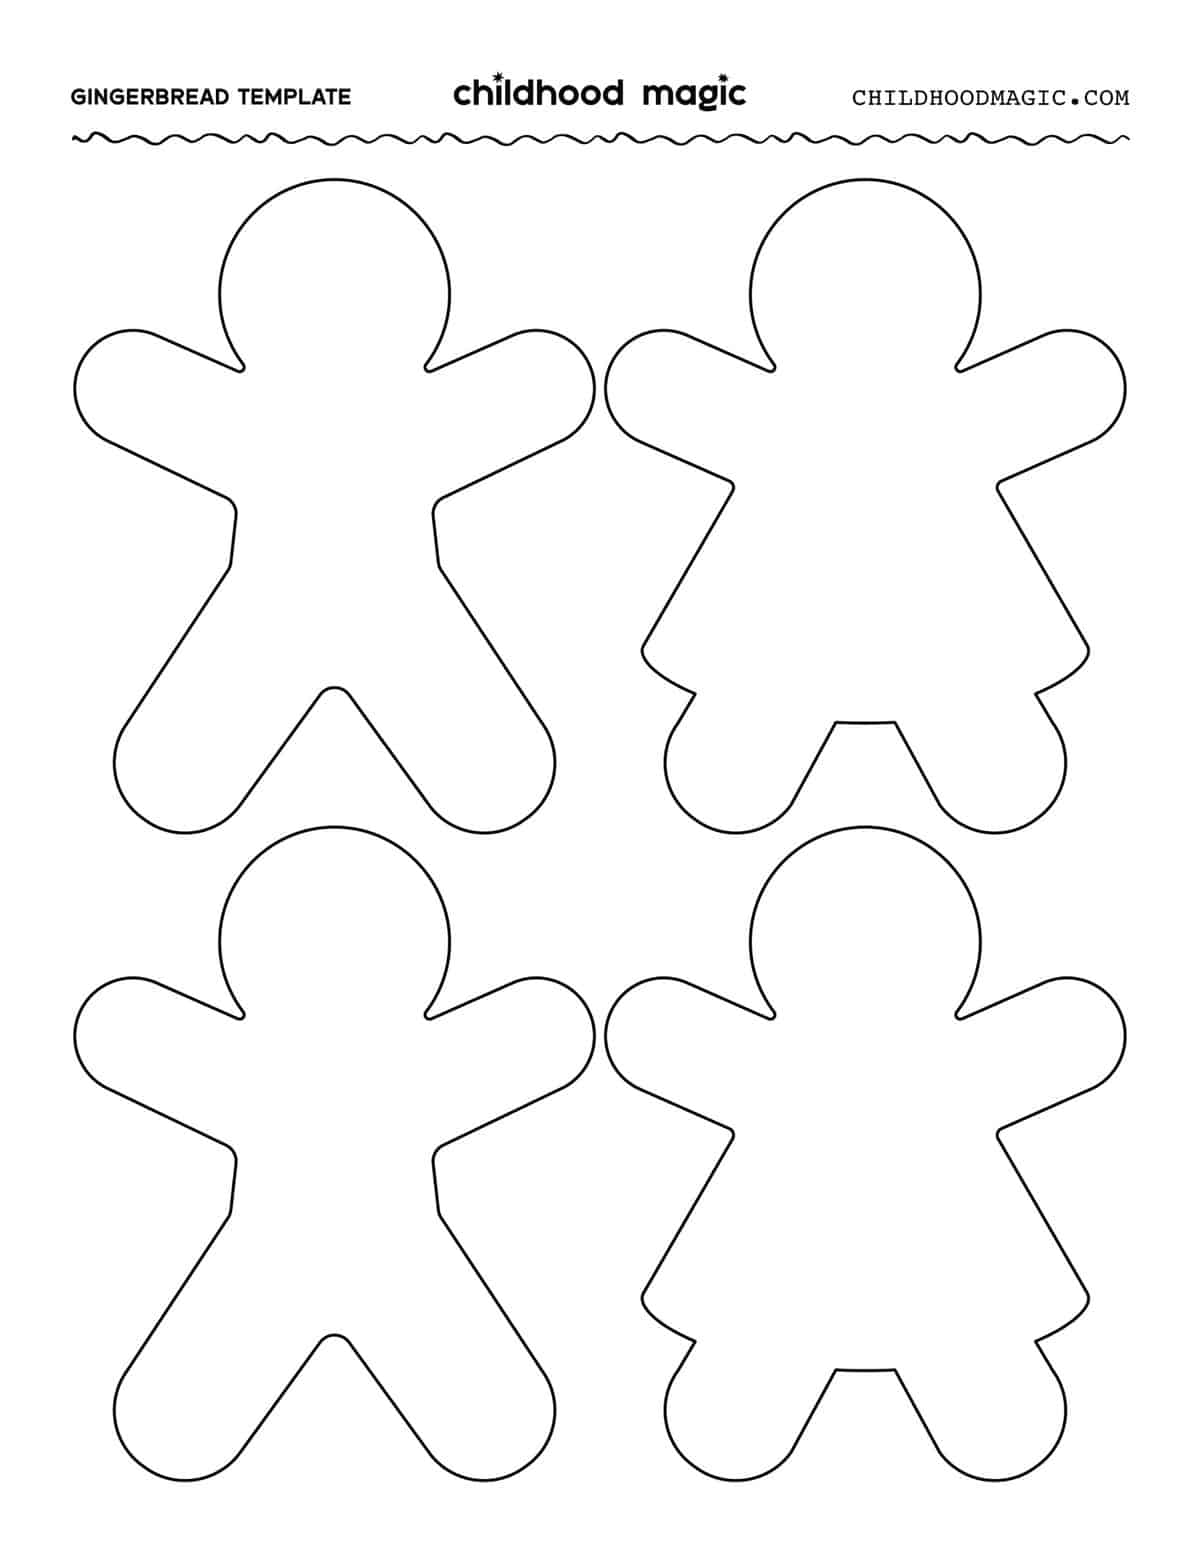 gingerbread-man-template-free-printable-childhood-magic